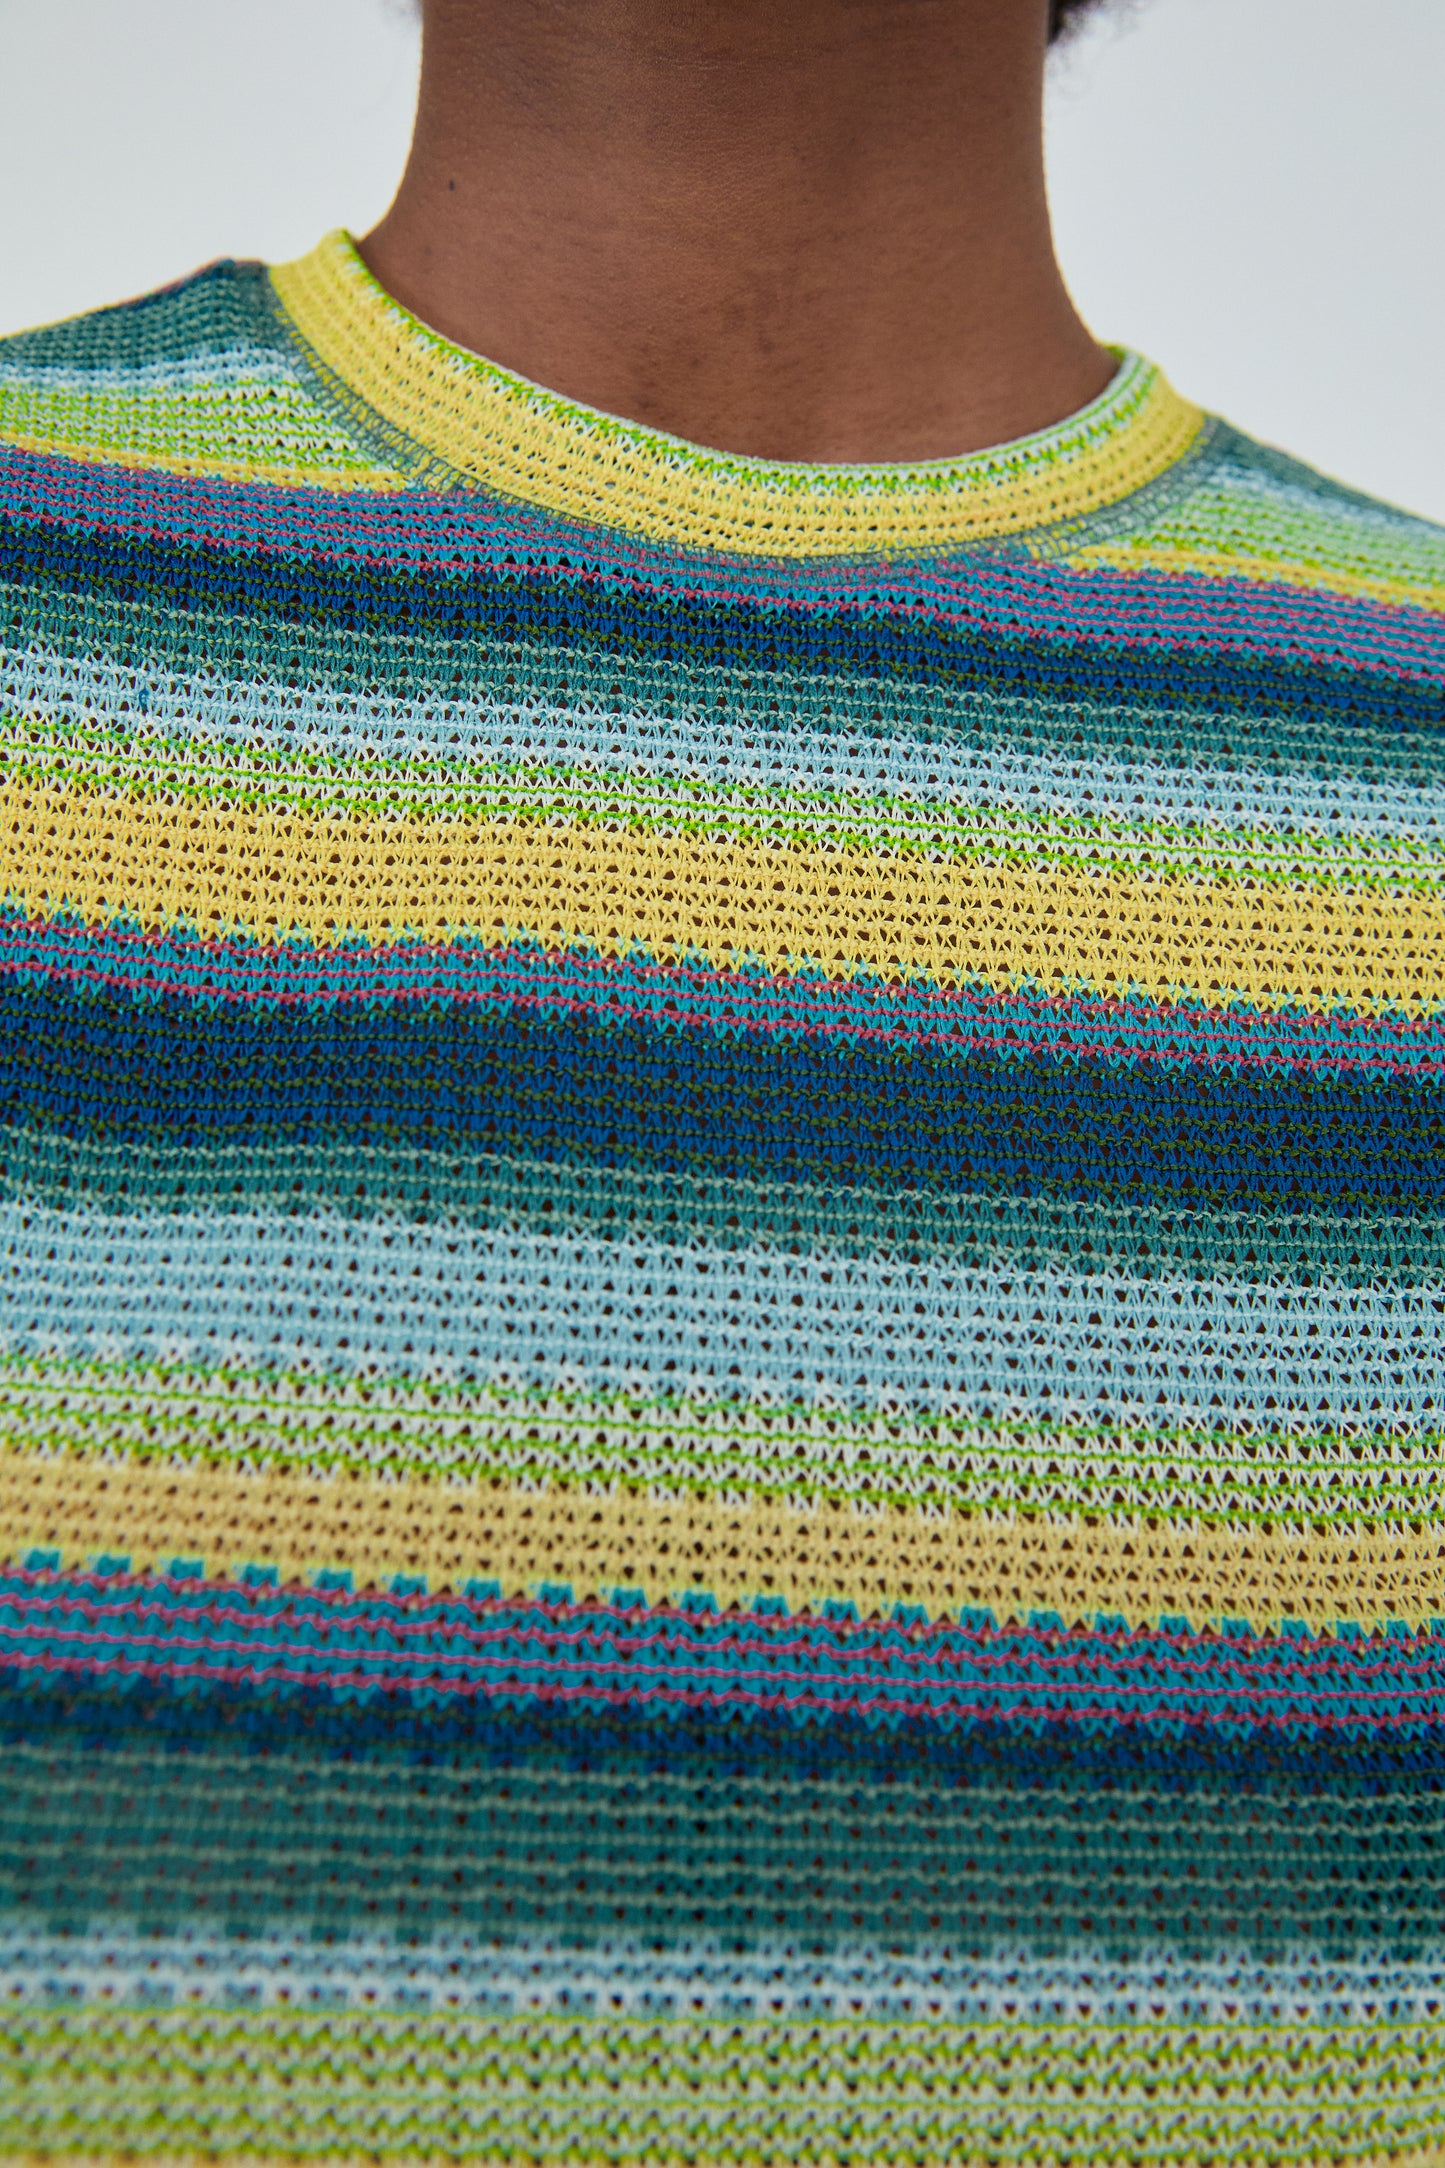 Crocheted Summer Knit Top, Multi Green